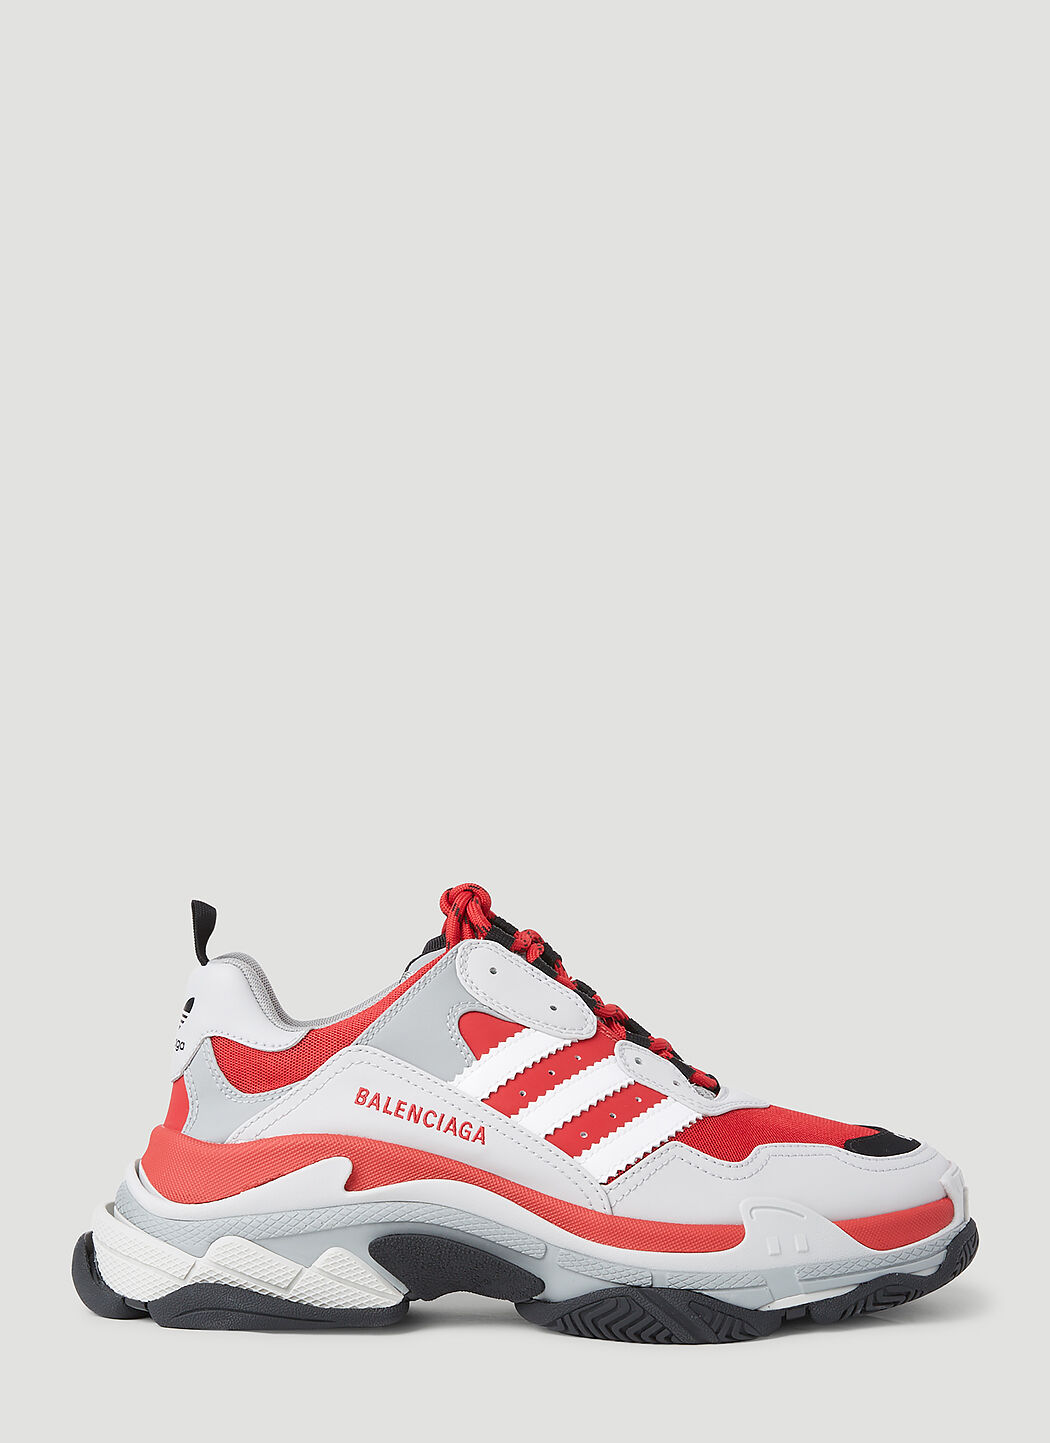 Balenciaga x adidas Triple S Sneakers Red axb0151003